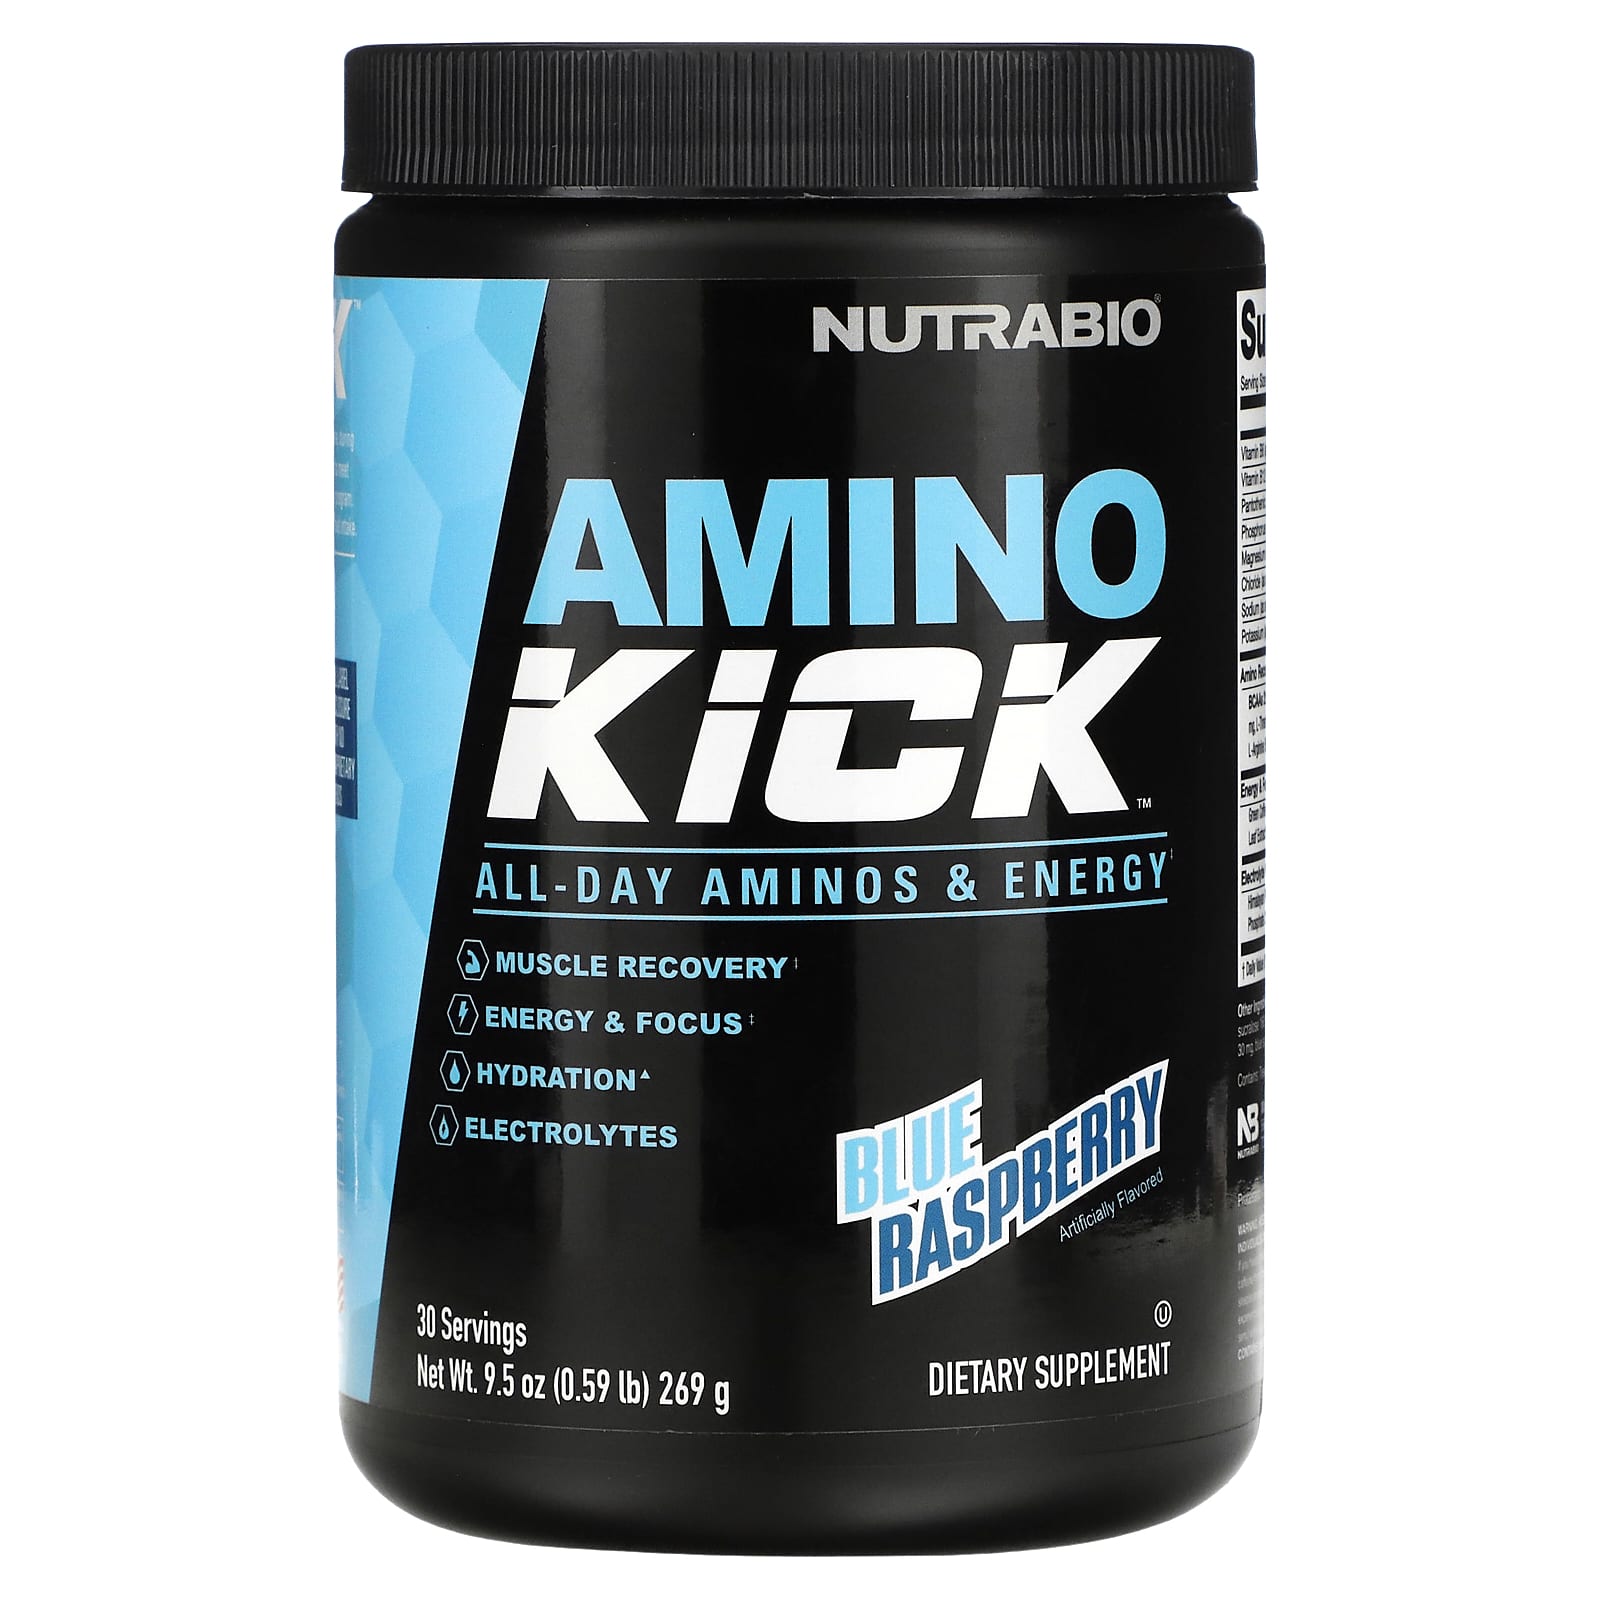 Пищевая Добавка Nutrabio Labs Amino Kick, голубая малина, 269 г спортивная добавка nutrabio labs amino kick голубая малина 20 стиков по 9г